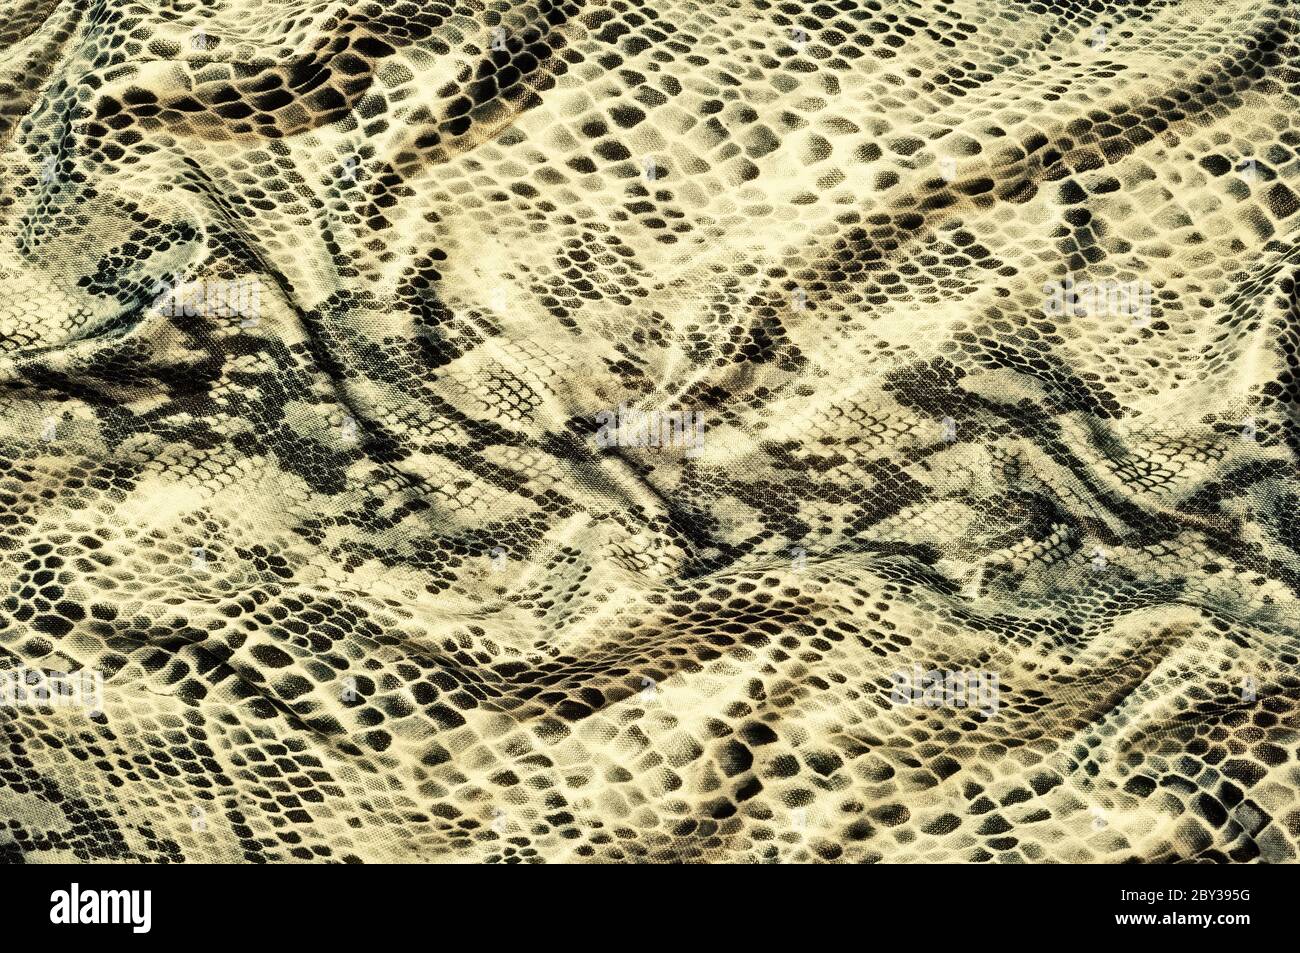 Texture of snake skin fabric Stock Photo